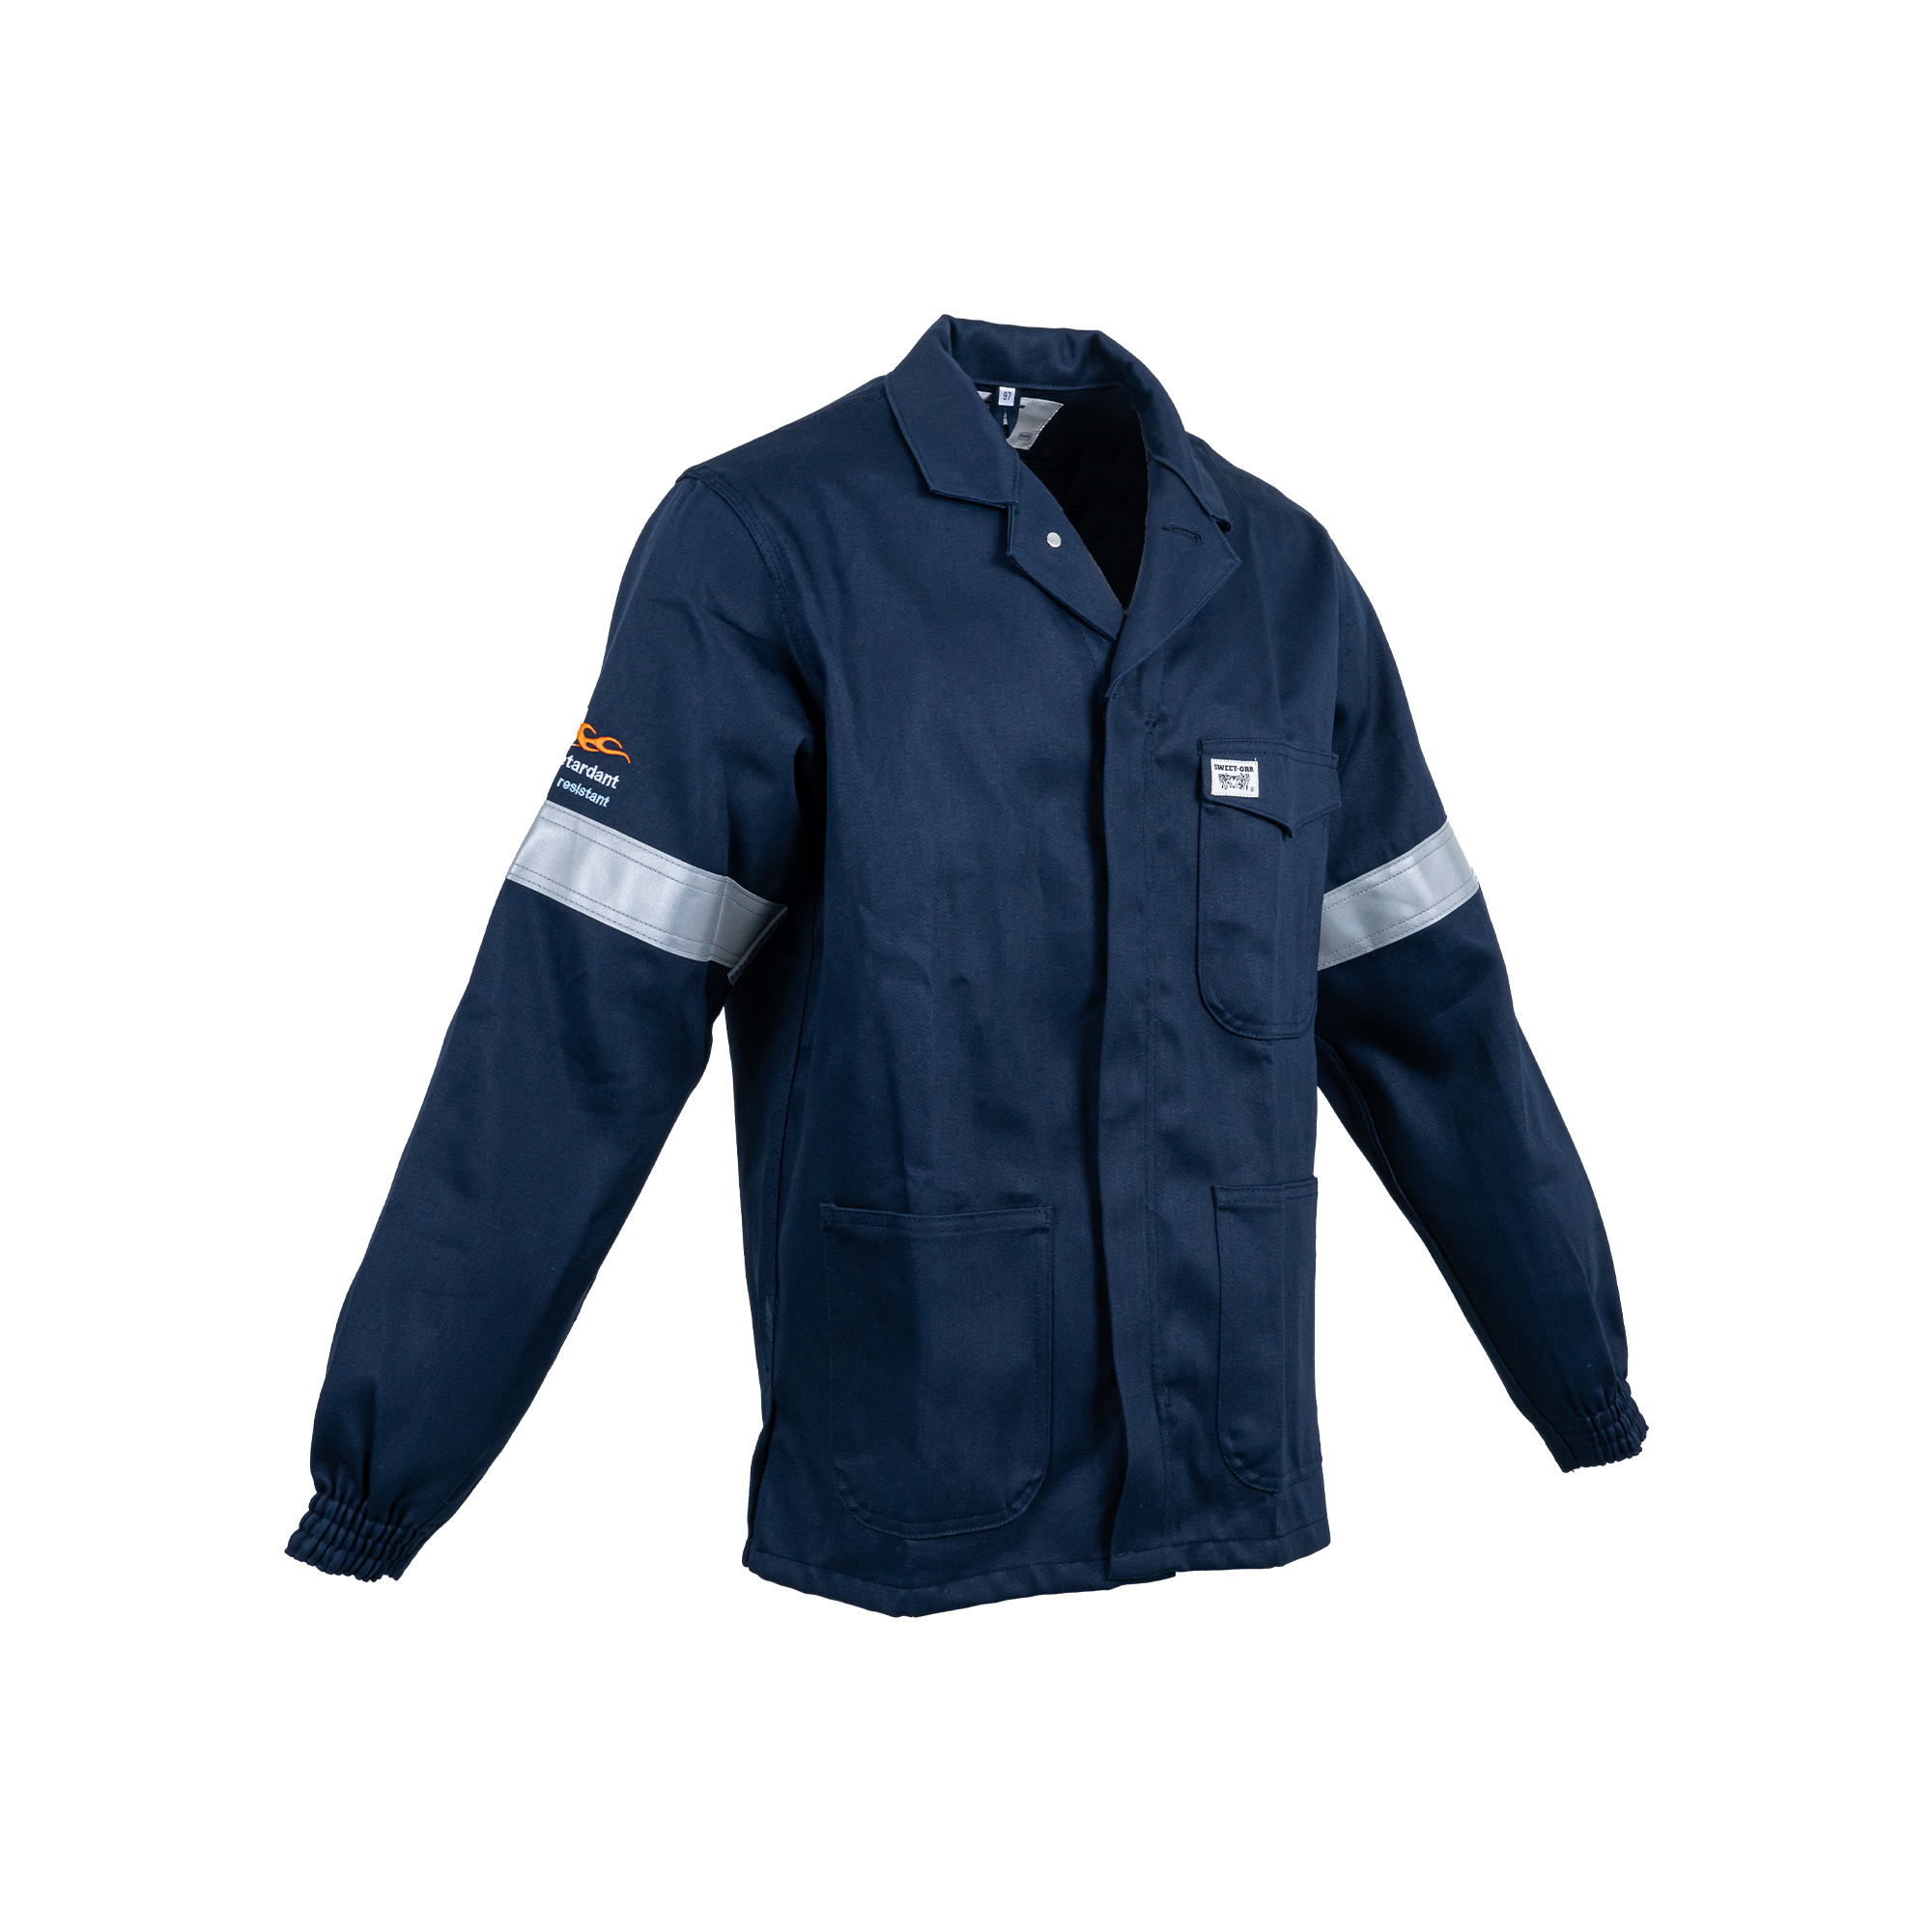 Sweet-Orr Acid Flame Overall Jacket Navy Blue - Protekta Safety Gear